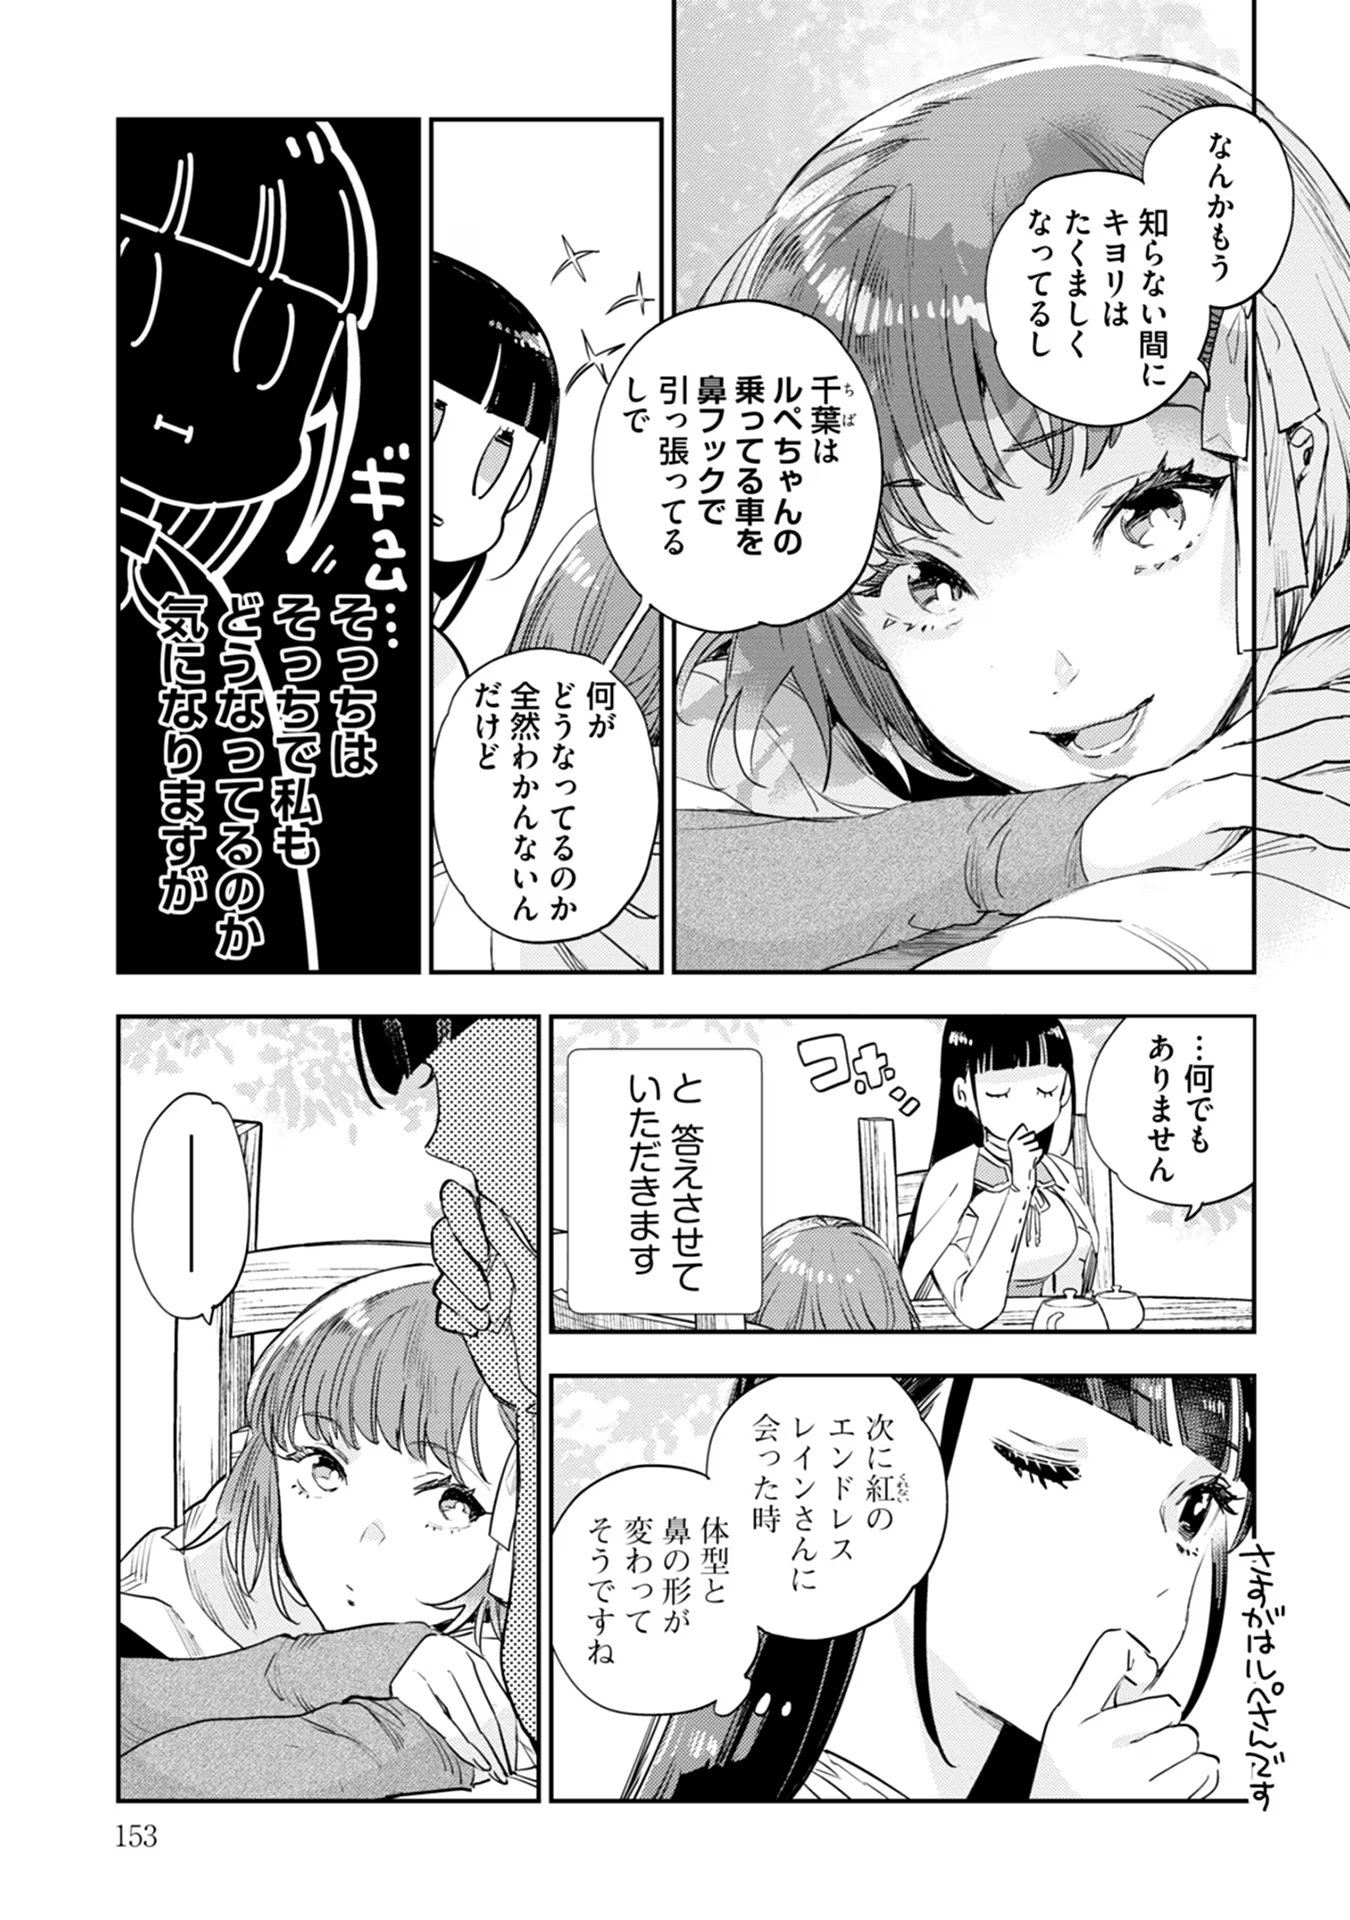 JK Haru Wa Isekai De Shoufu Ni Natta - Chapter 43 - Page 4